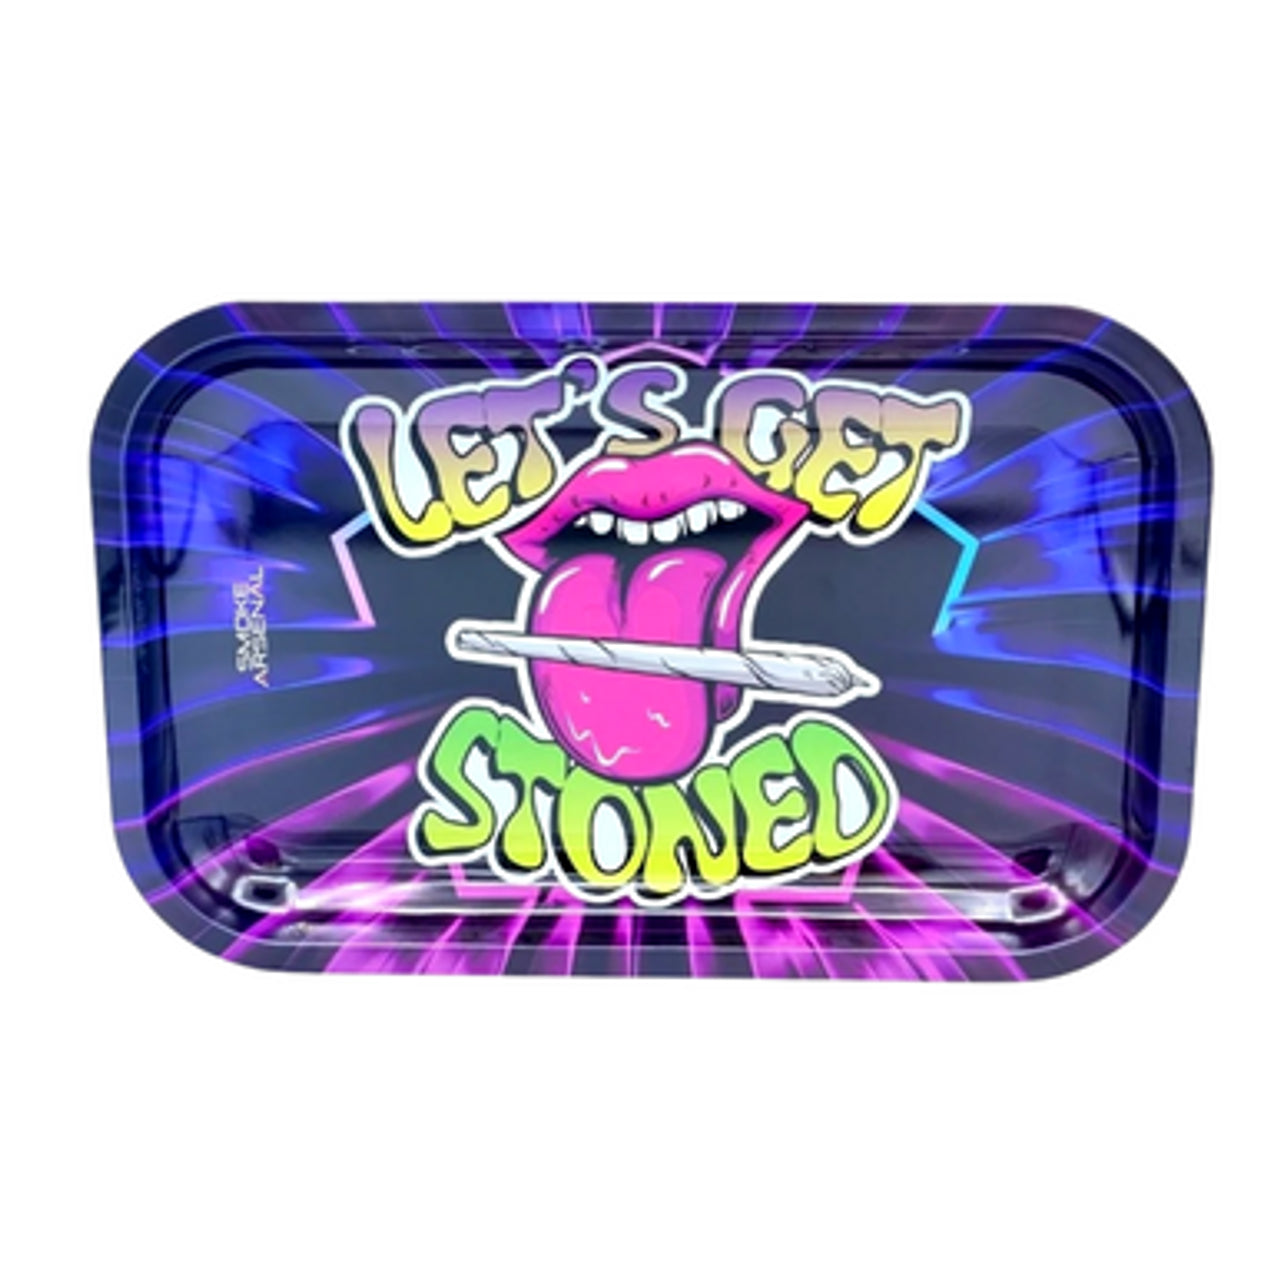 Smoke Arsenal - Rolling Tray, Medium - Lets Get Stoned